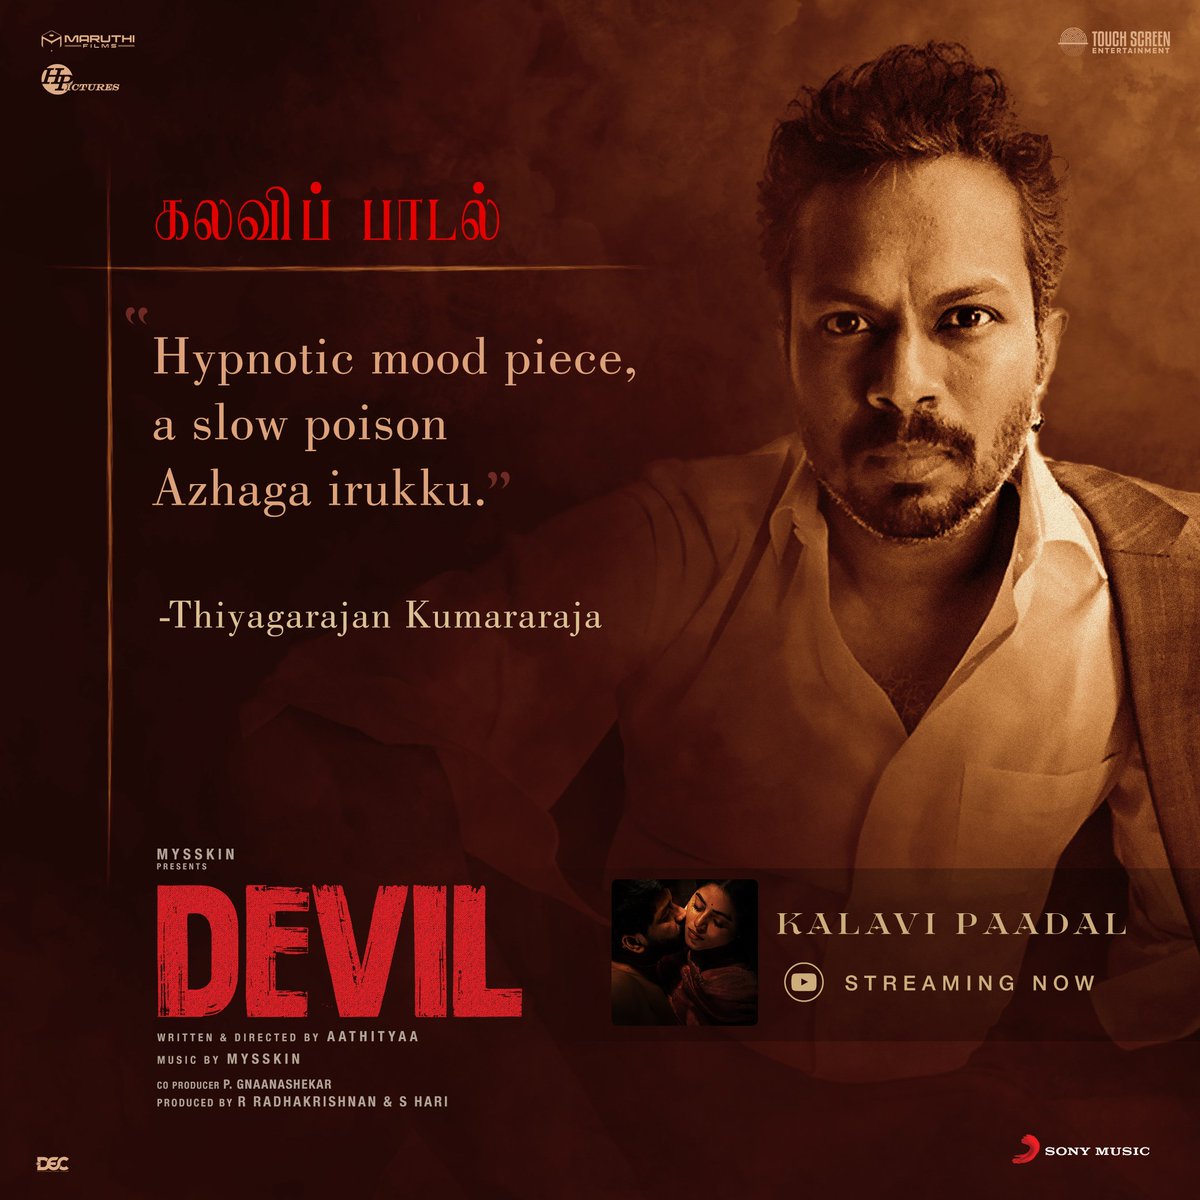 #KalaviPaadal from #Devil streaming now! 🎶 Check it out here ▶️ bit.ly/Kalavi A @DirectorMysskin Musical ❤️ @MaruthiLtd @gnanase9137312 @Aathityaa3 @shamna_kkasim @vidaarth_actor @Thrigun_Aactor @Lv_Sri #DevilFirstSingle